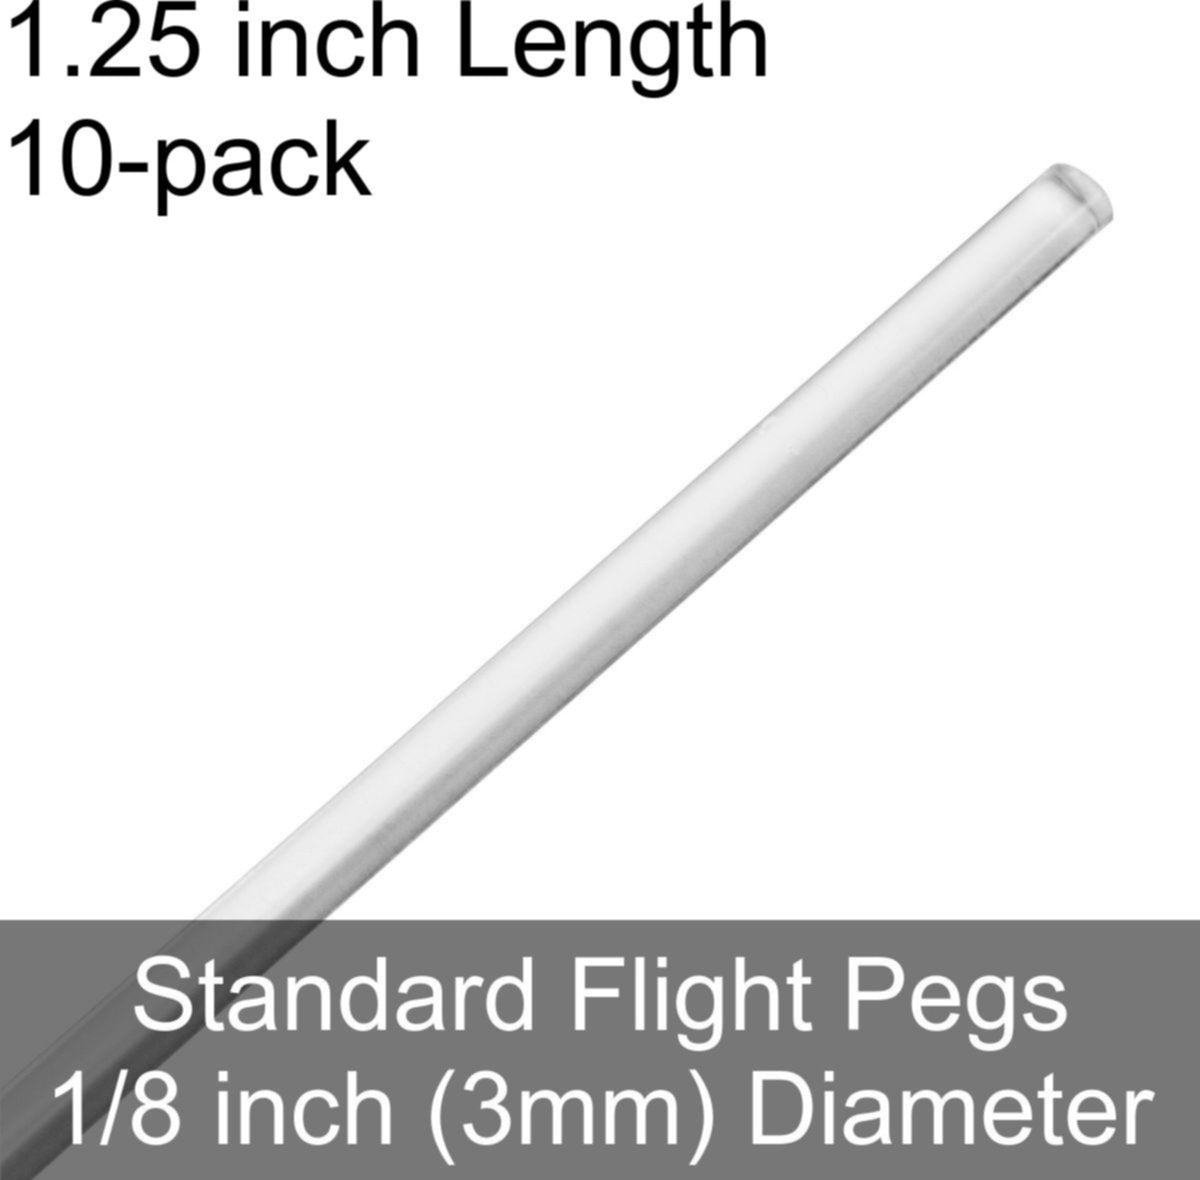 Standard Flight Pegs, 1.25'' length (10)